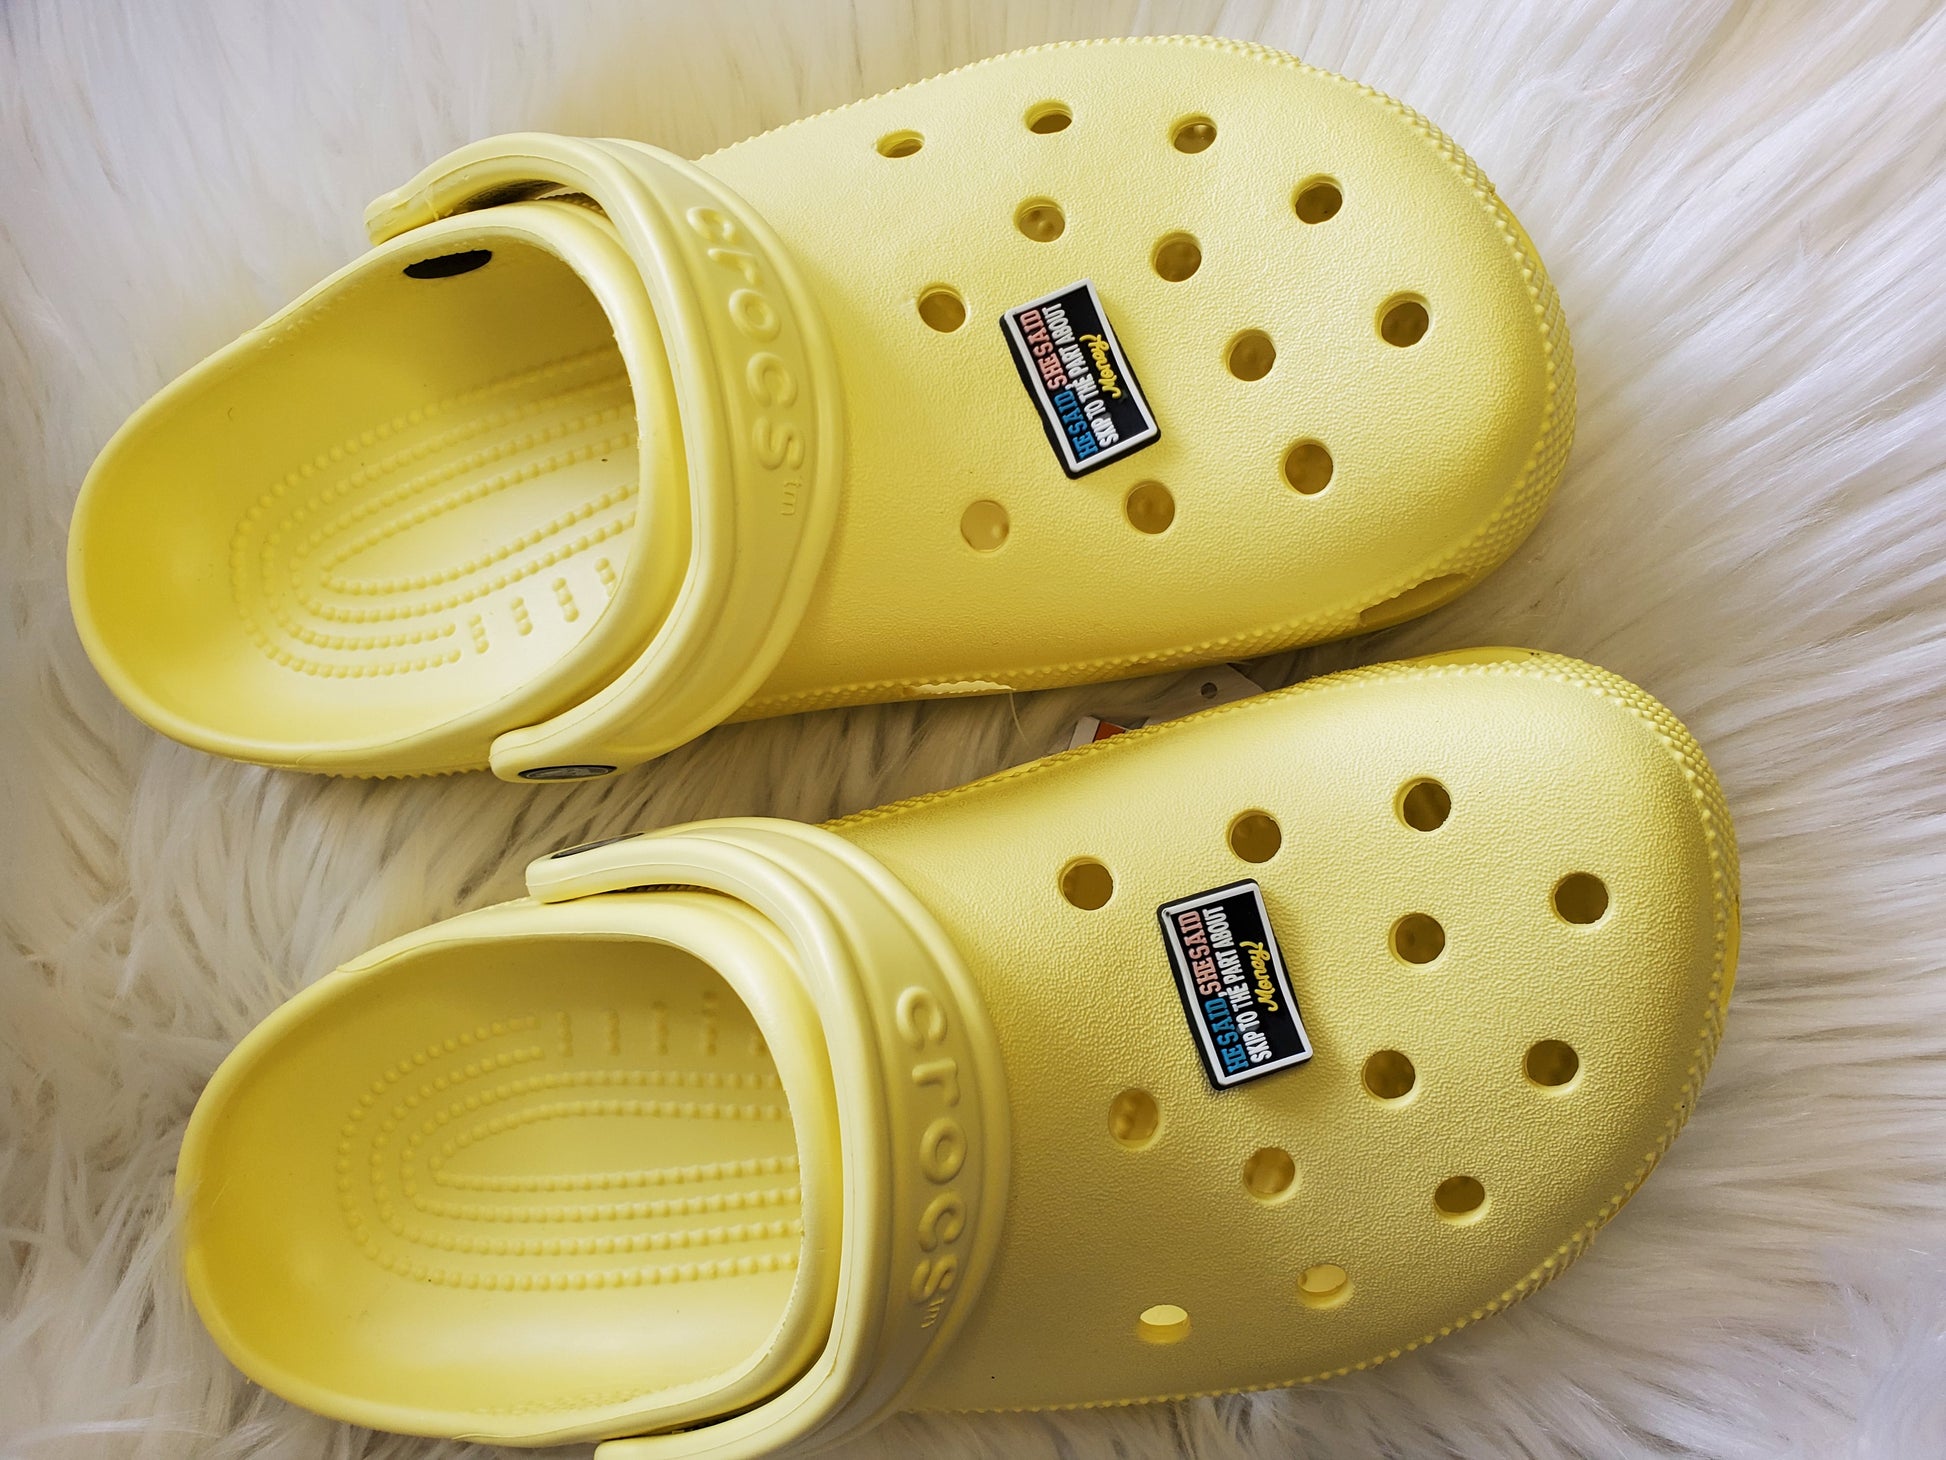 Custom Designed Crocs